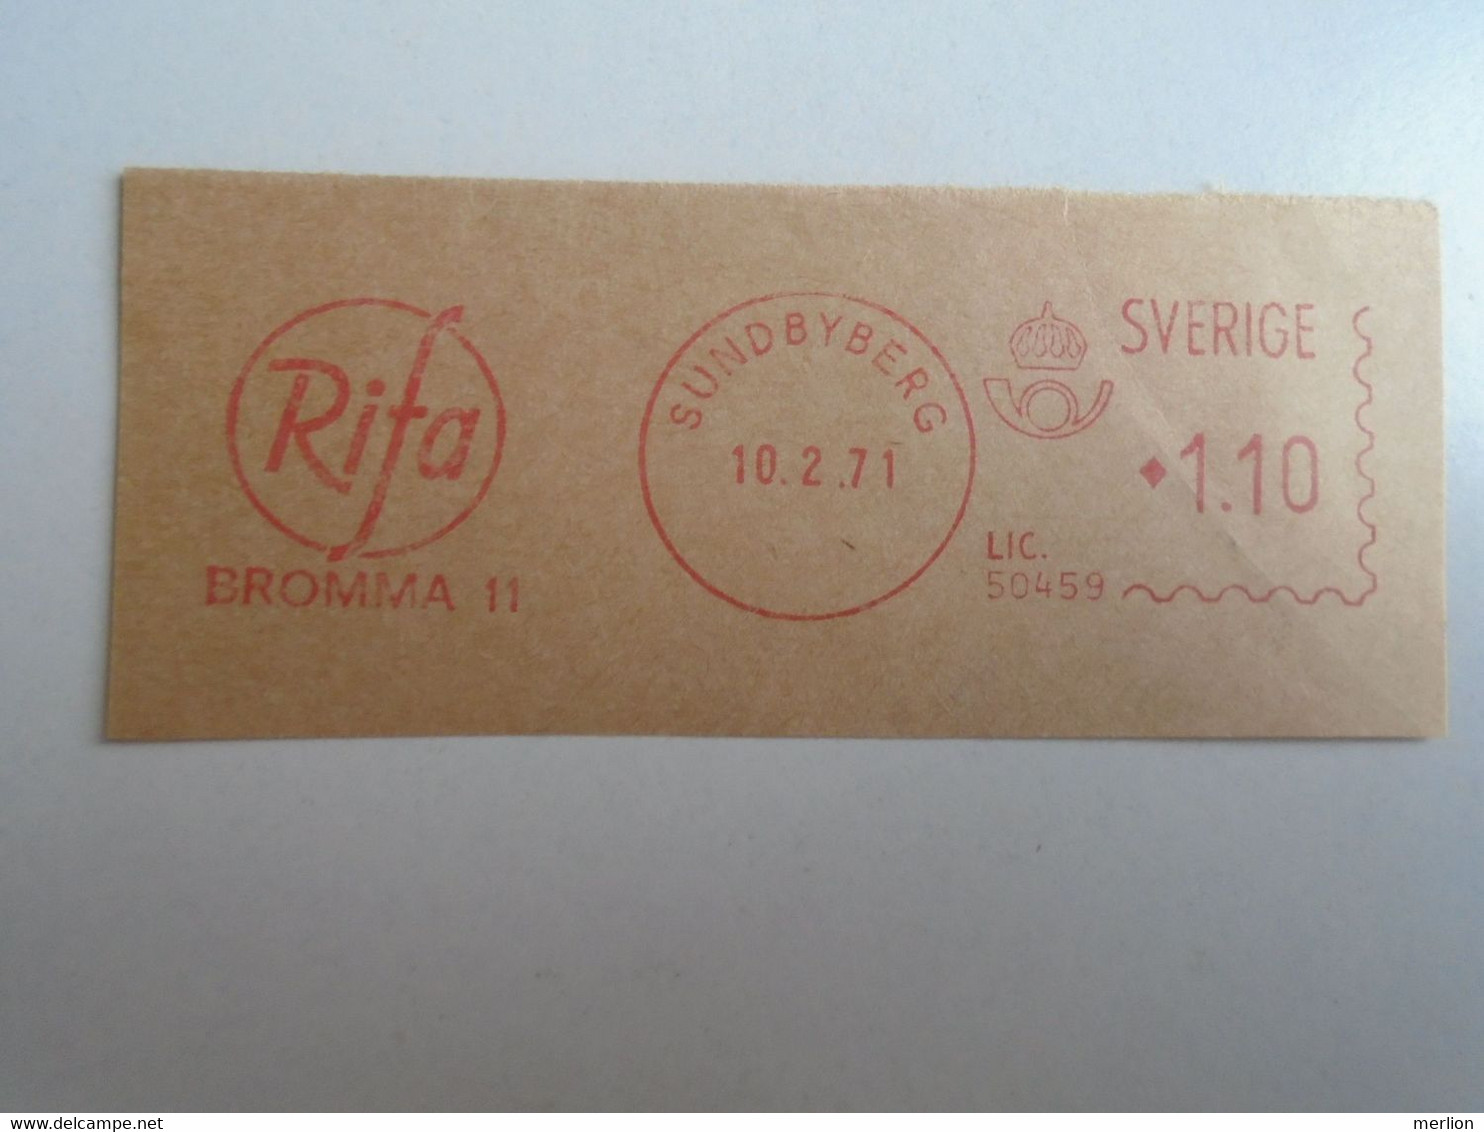 D191861  Sweden Sverige   RIFA  -Sundbyberg    1971  - 1.10 K - RED METER  FREISTEMPEL  EMA - Viñetas De Franqueo [ATM]